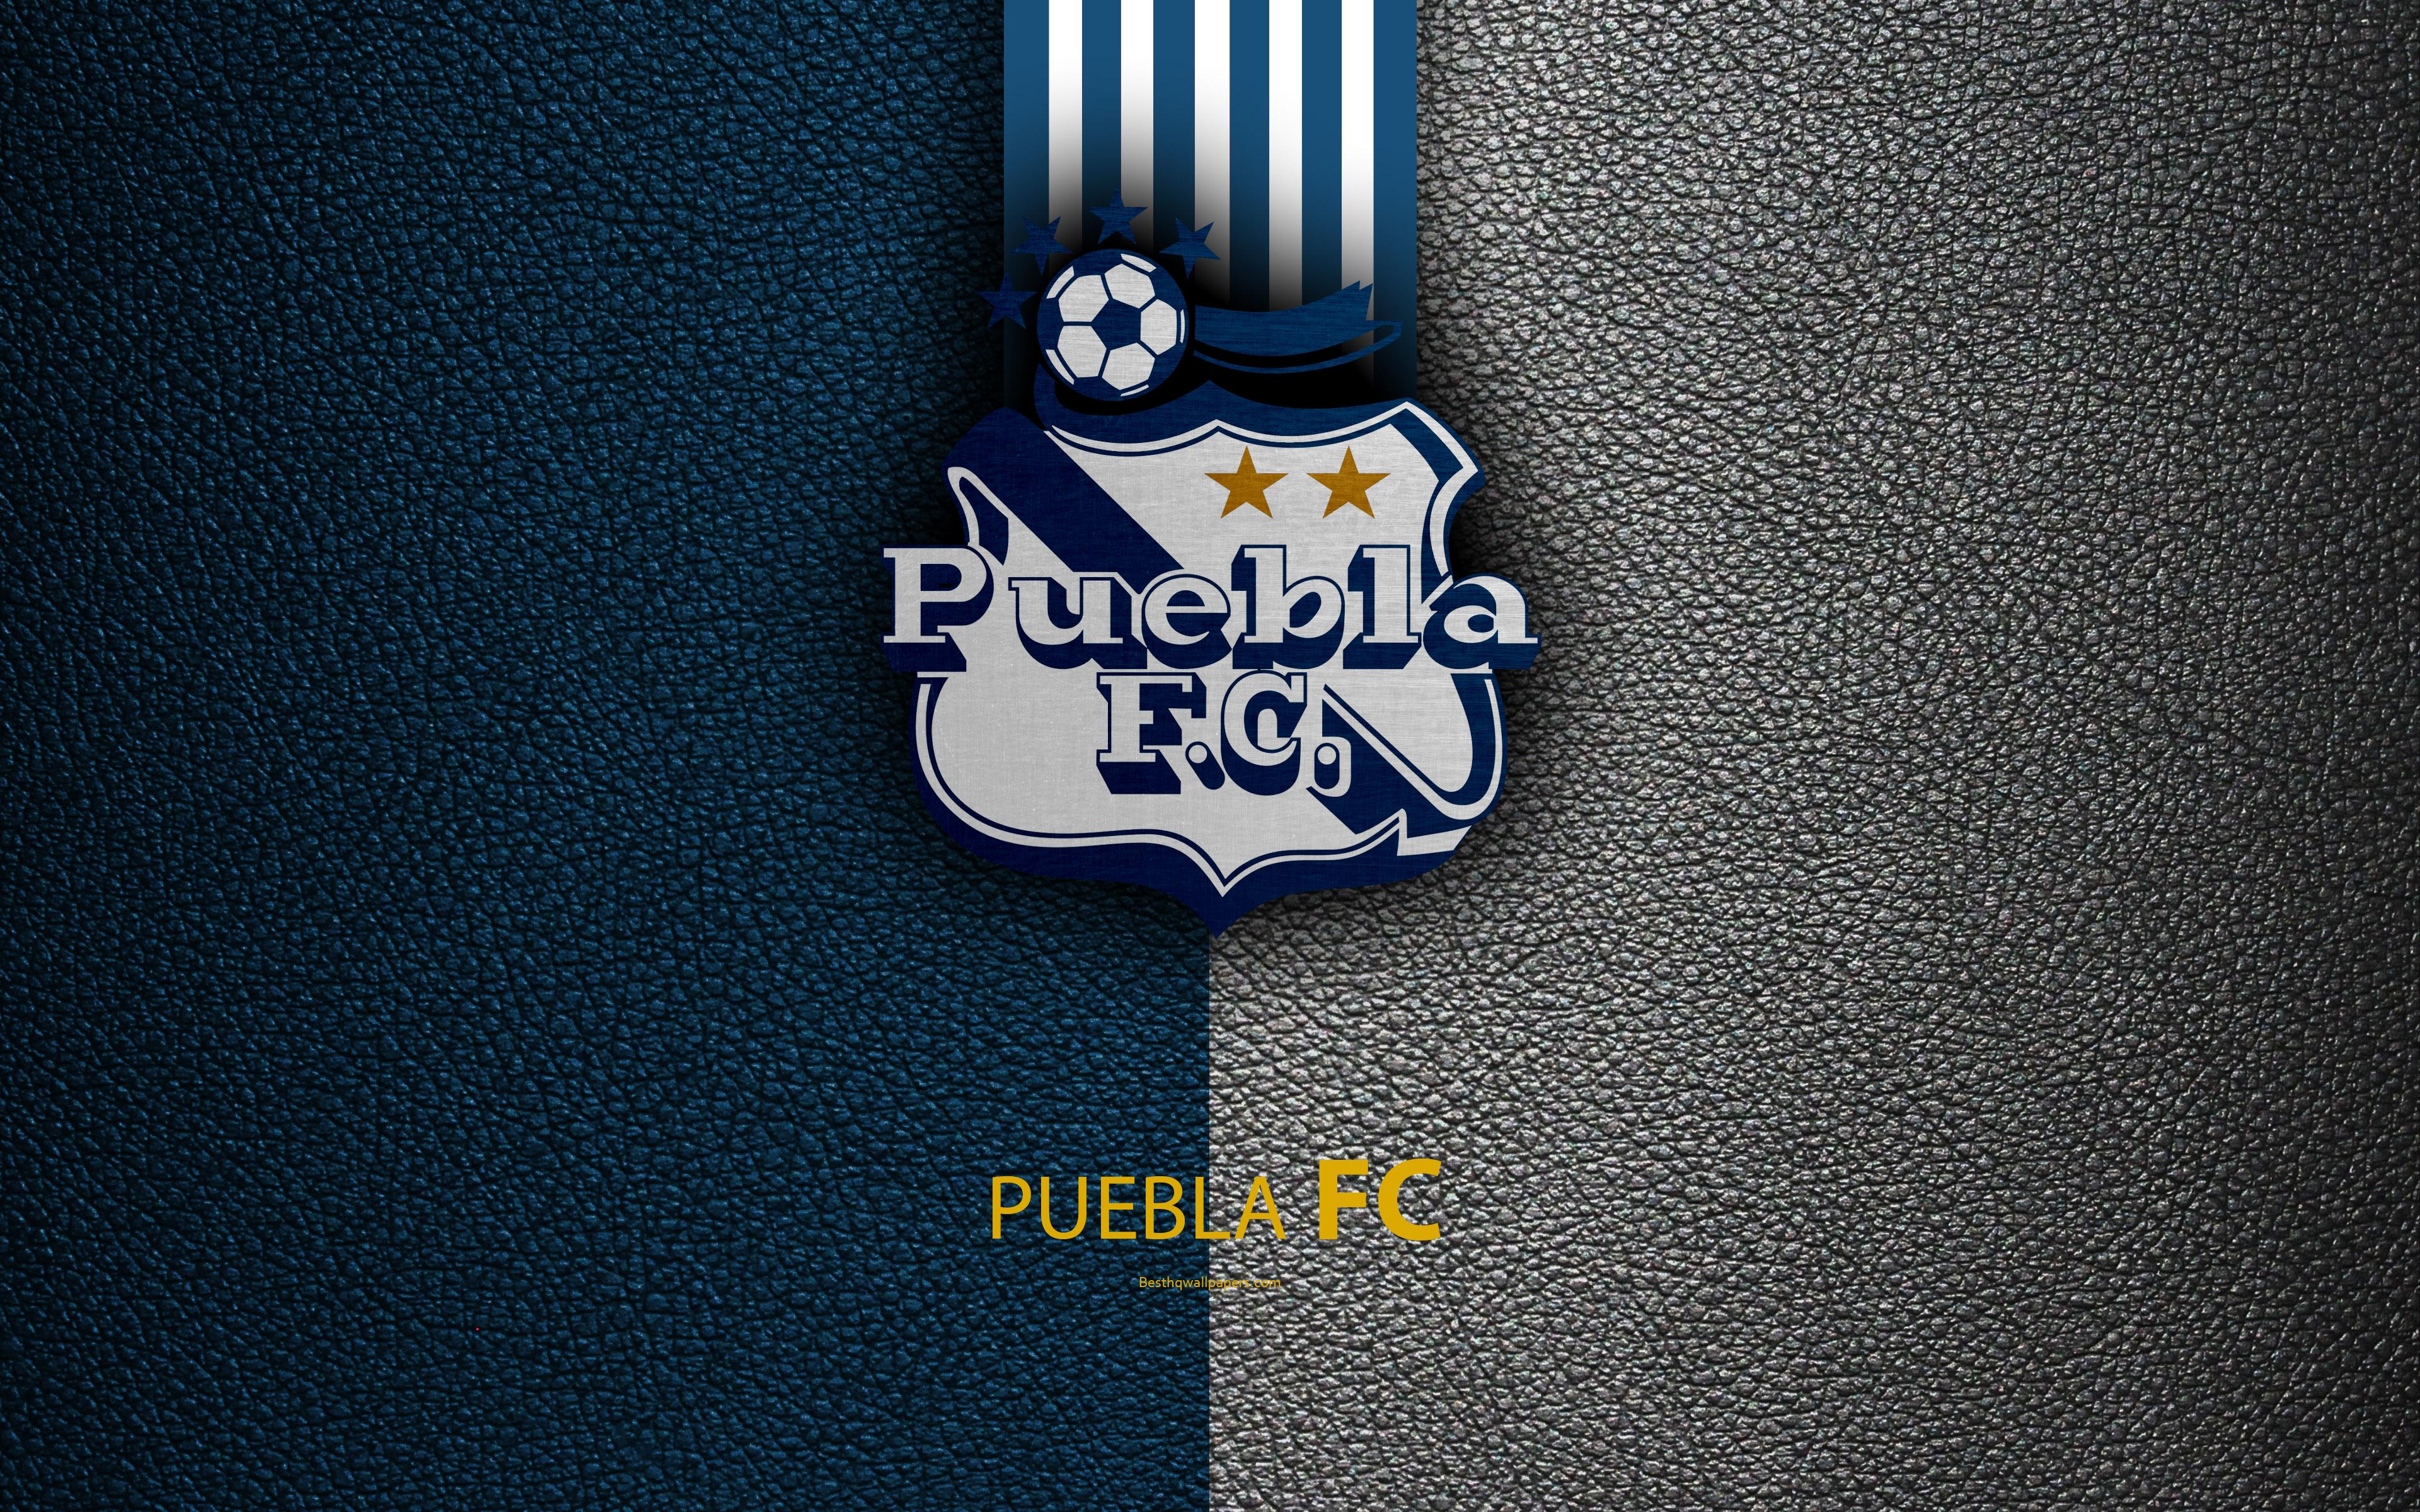 Download wallpaper Puebla FC, 4k, leather texture, logo, Mexican